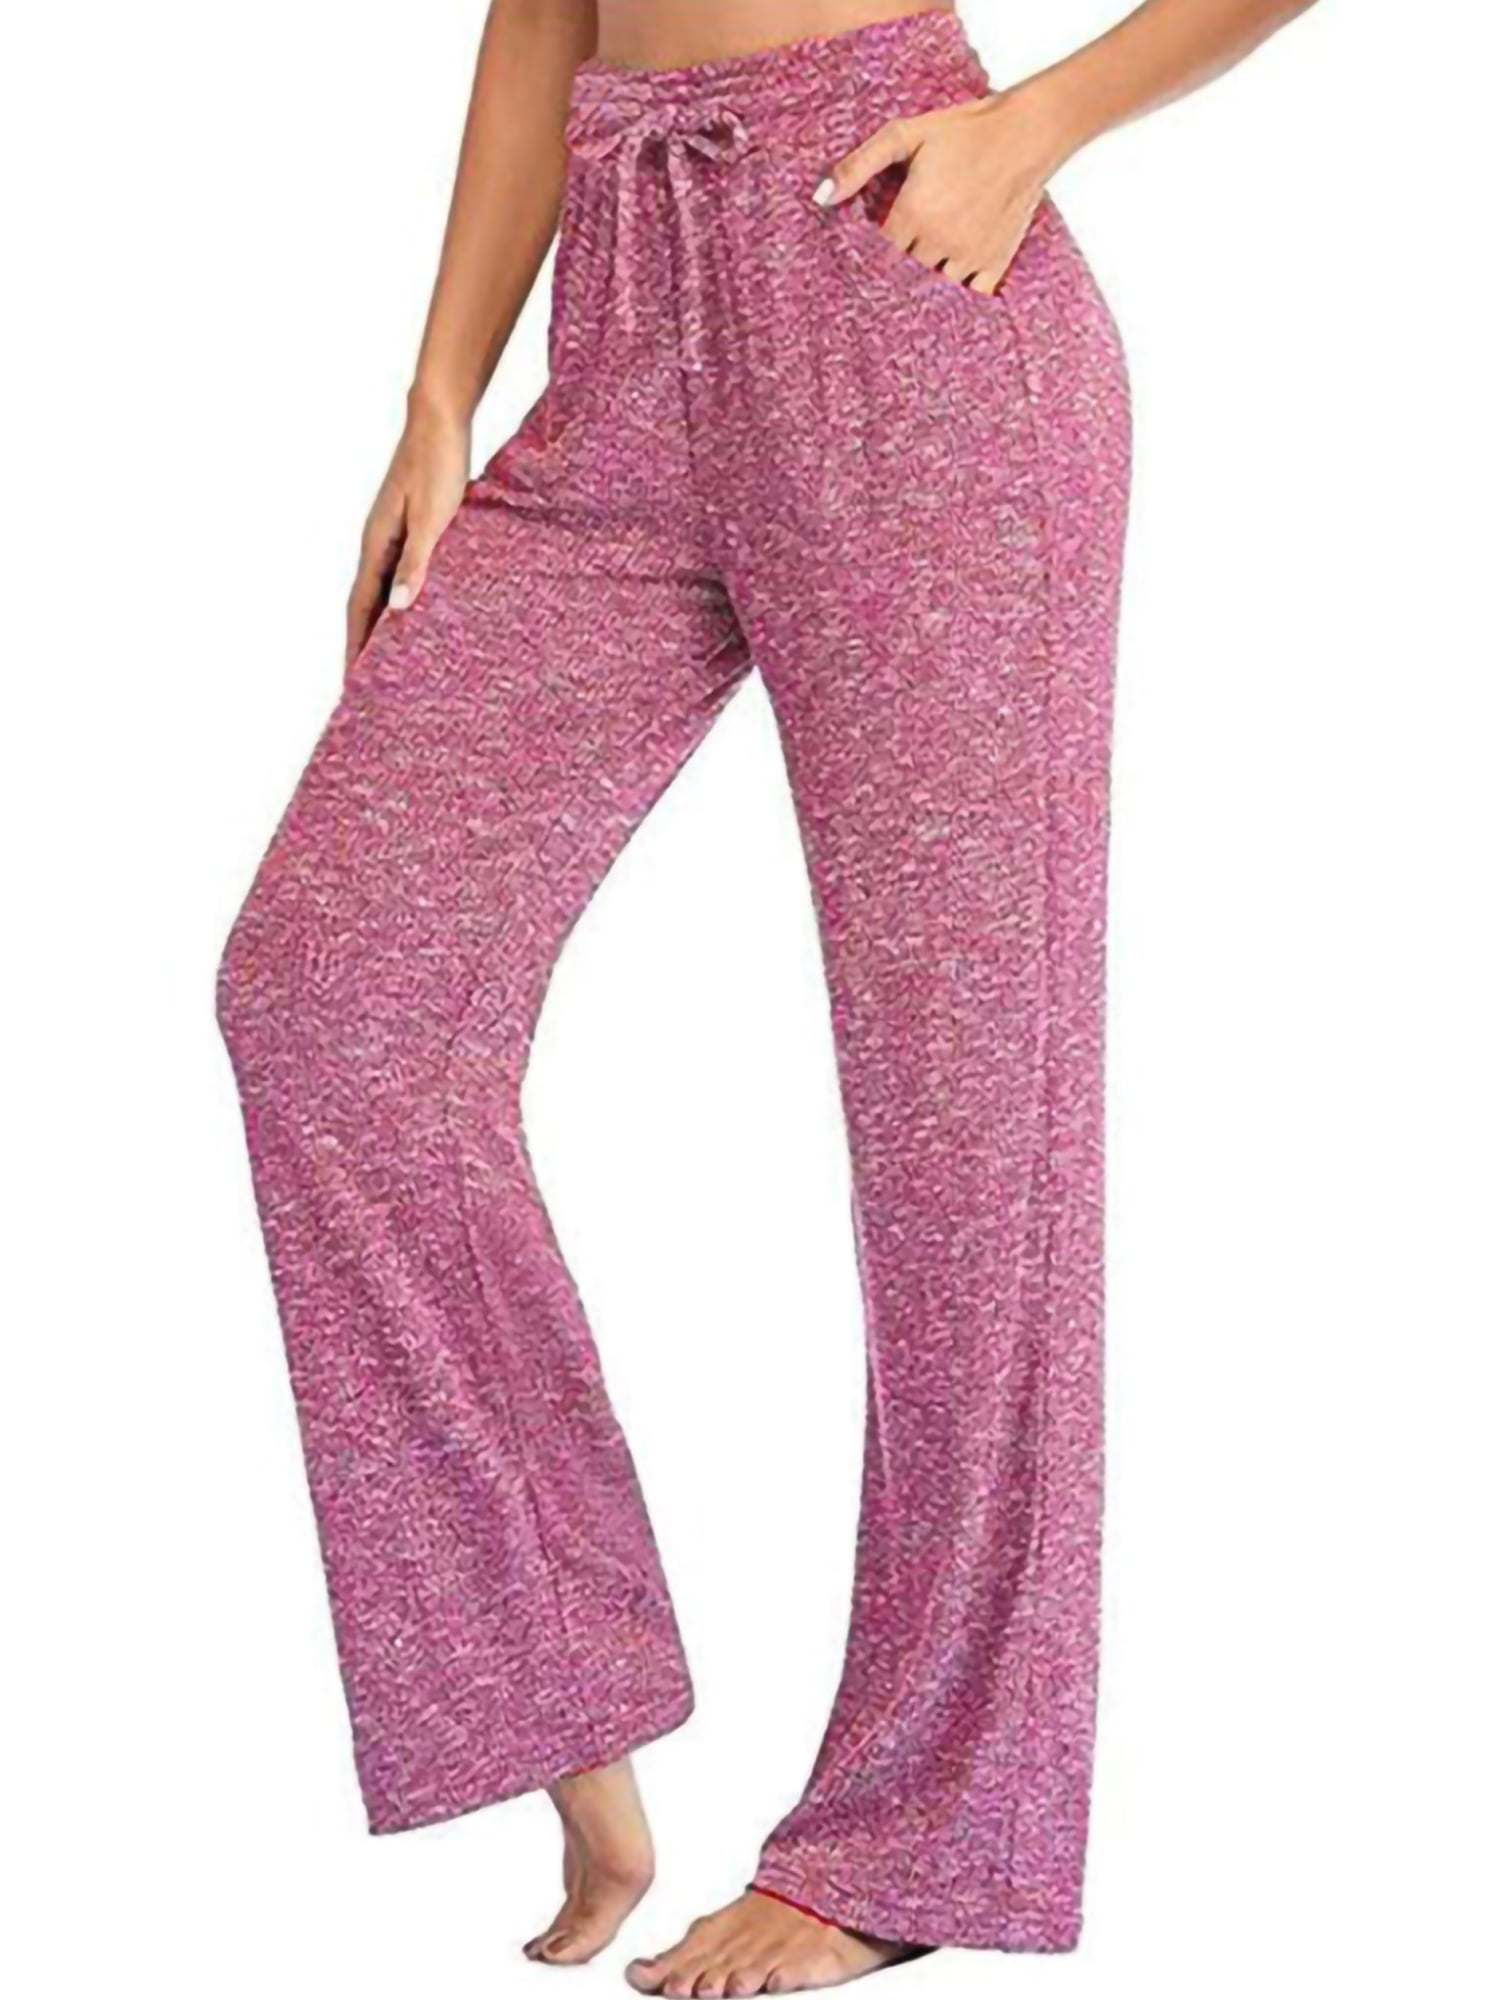 Super Soft Plush Drawstring Wide Leg Lounge Pant  Drawstring lounge pants,  Plus size sleepwear, Matches fashion